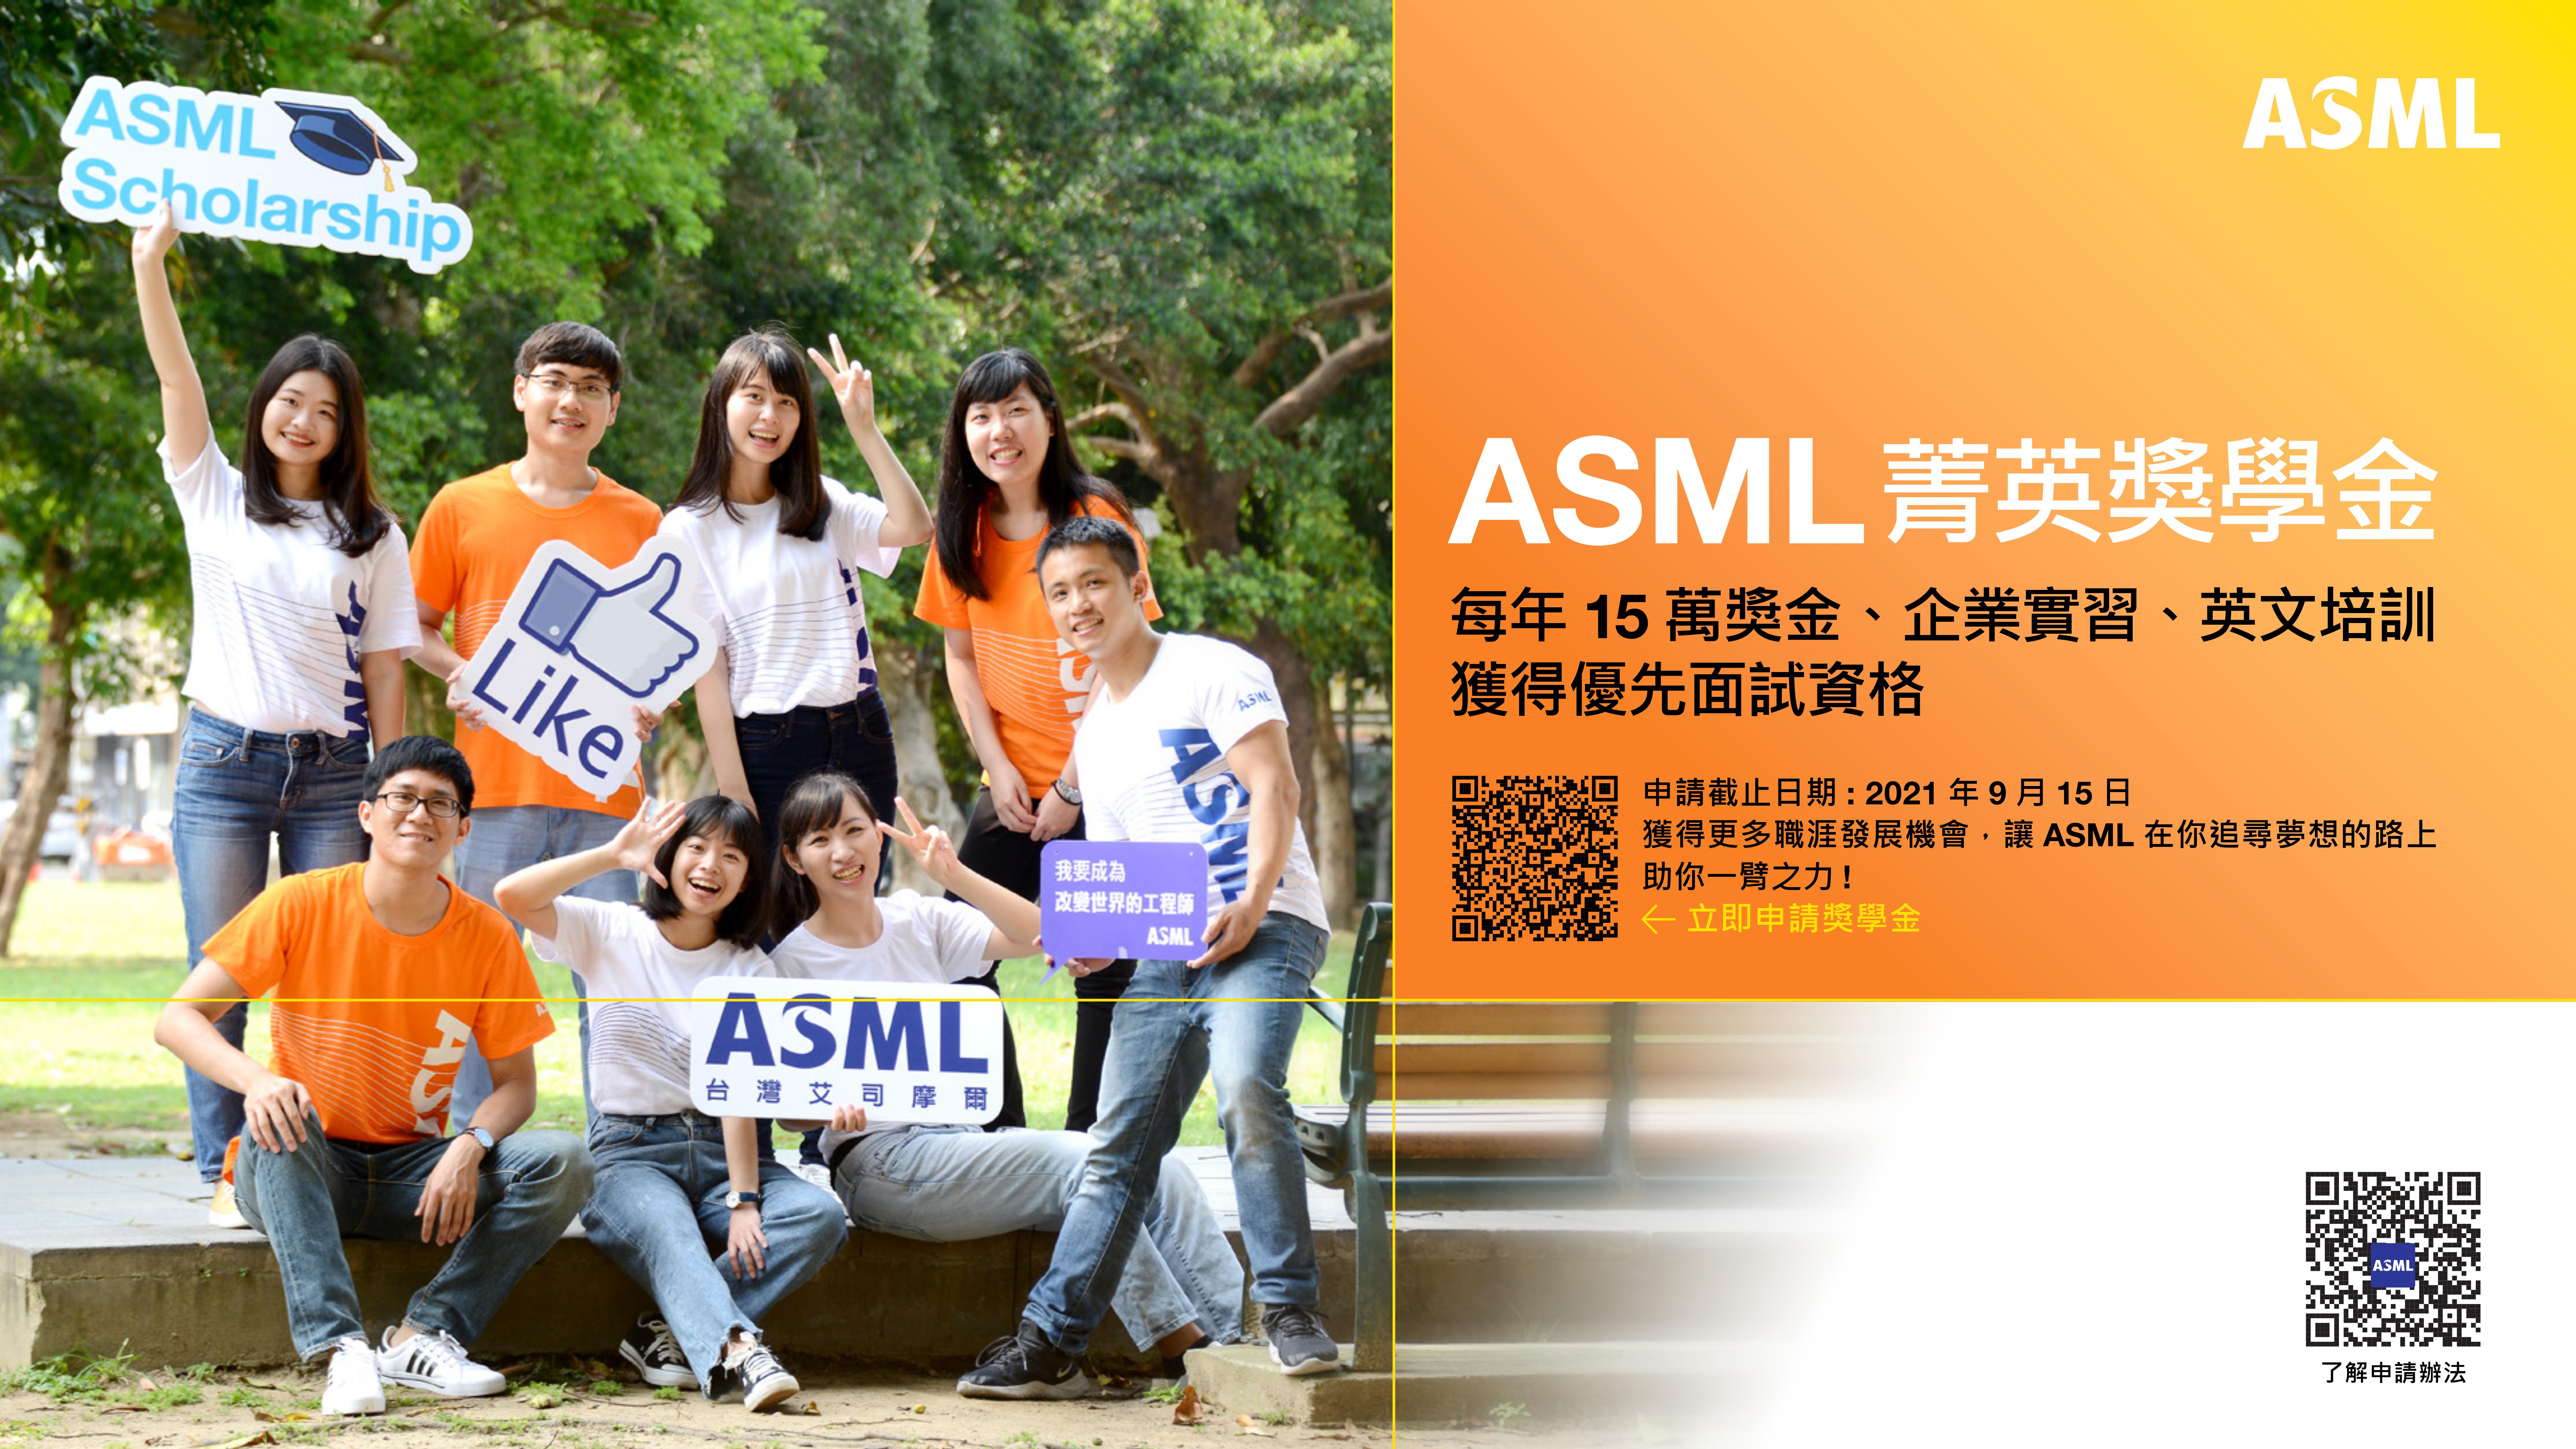 2021_ASML_菁英獎學金宣傳海報.jpg